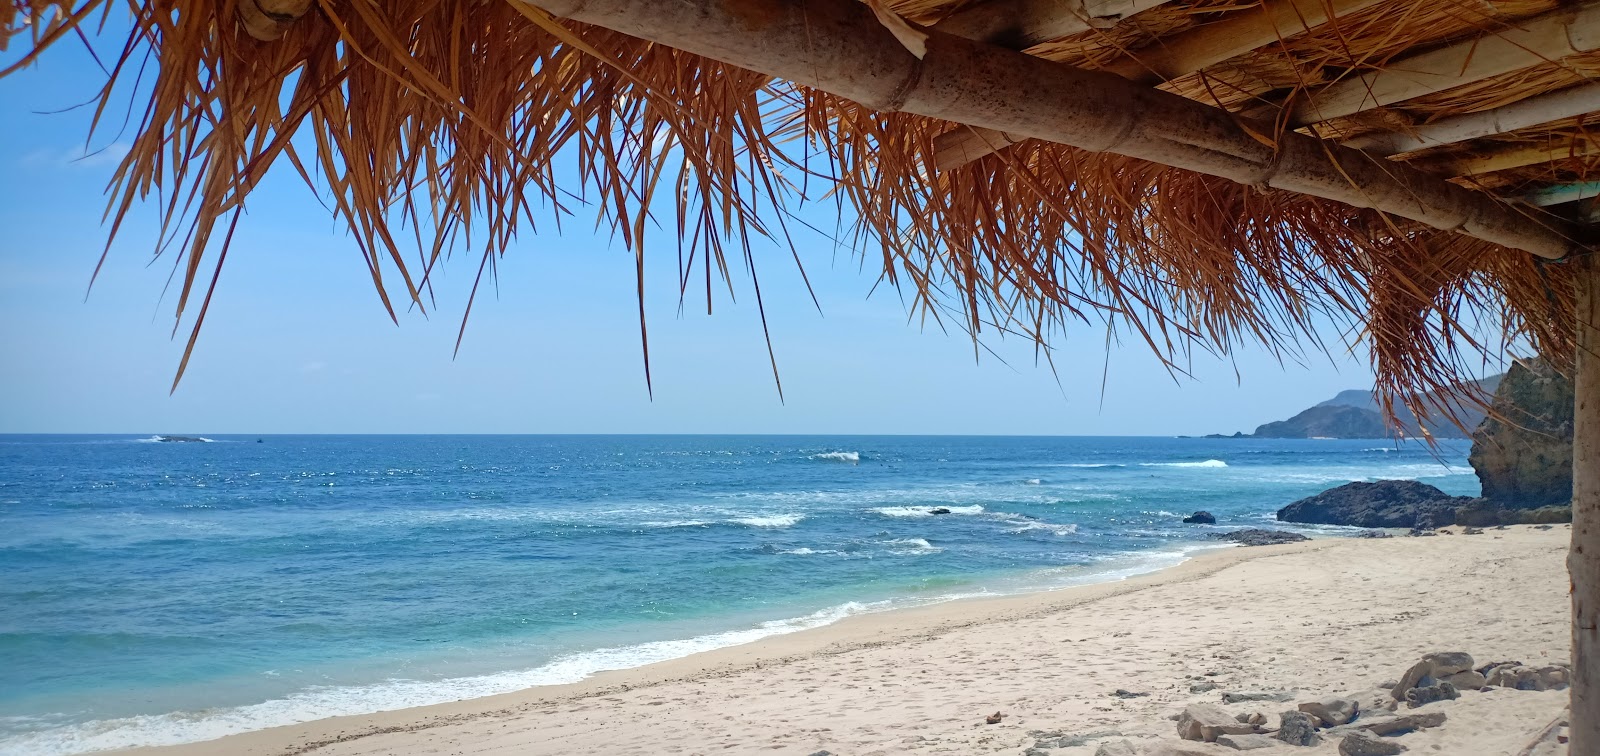 Fotografie cu Mandalika Queen Beach - locul popular printre cunoscătorii de relaxare